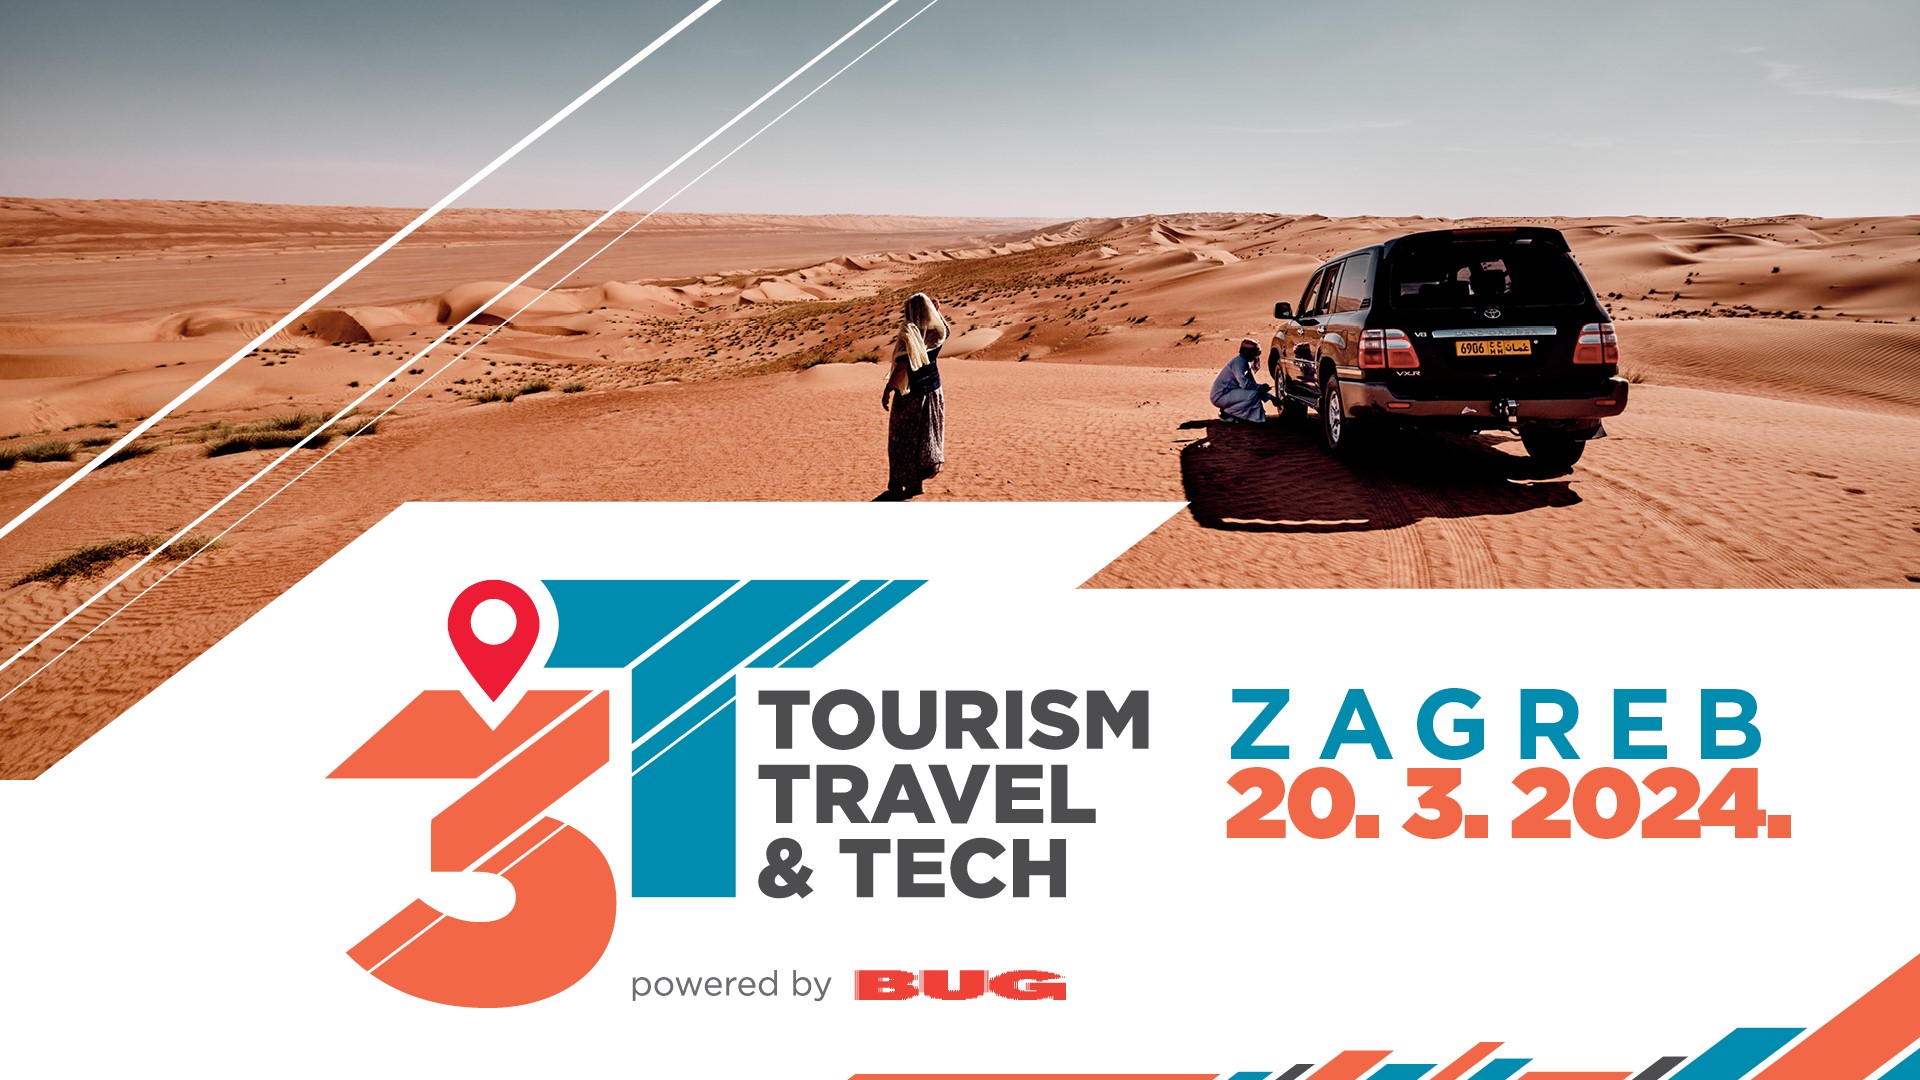 3T - Tourism, Travel & Tech 2024